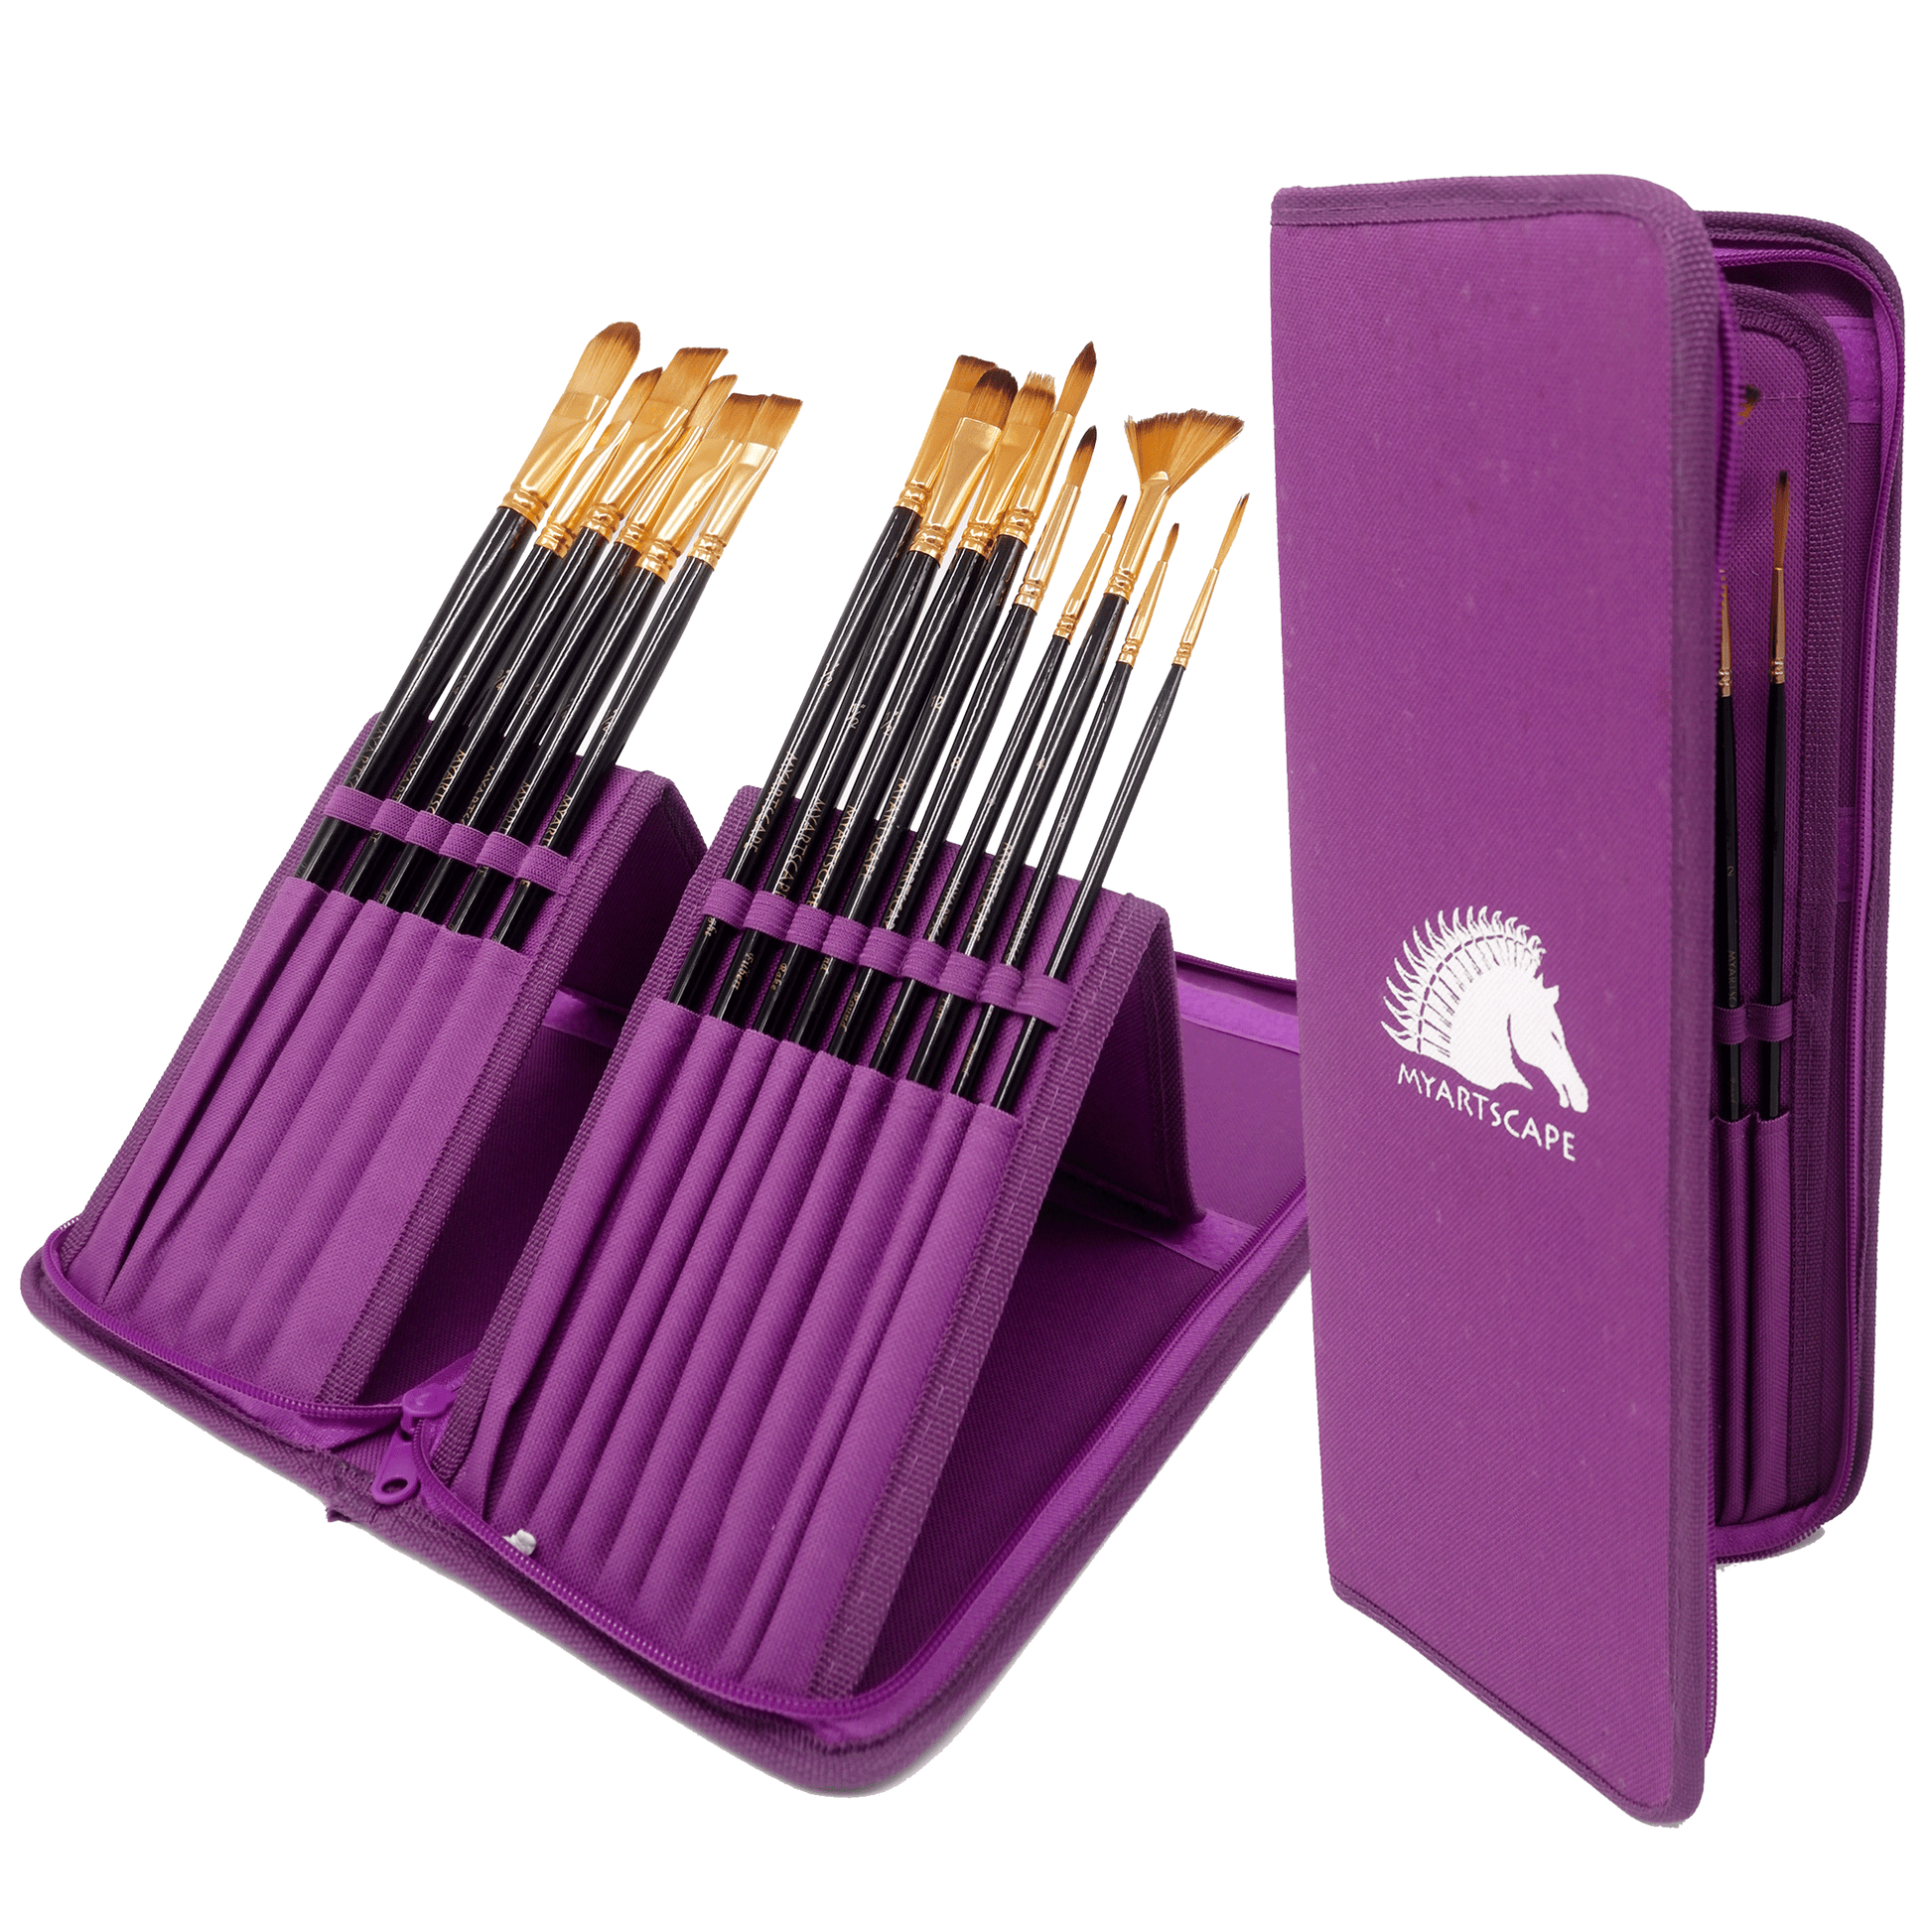 Miniature Paint Brushes with Holder, Set of 12 Art Brushes